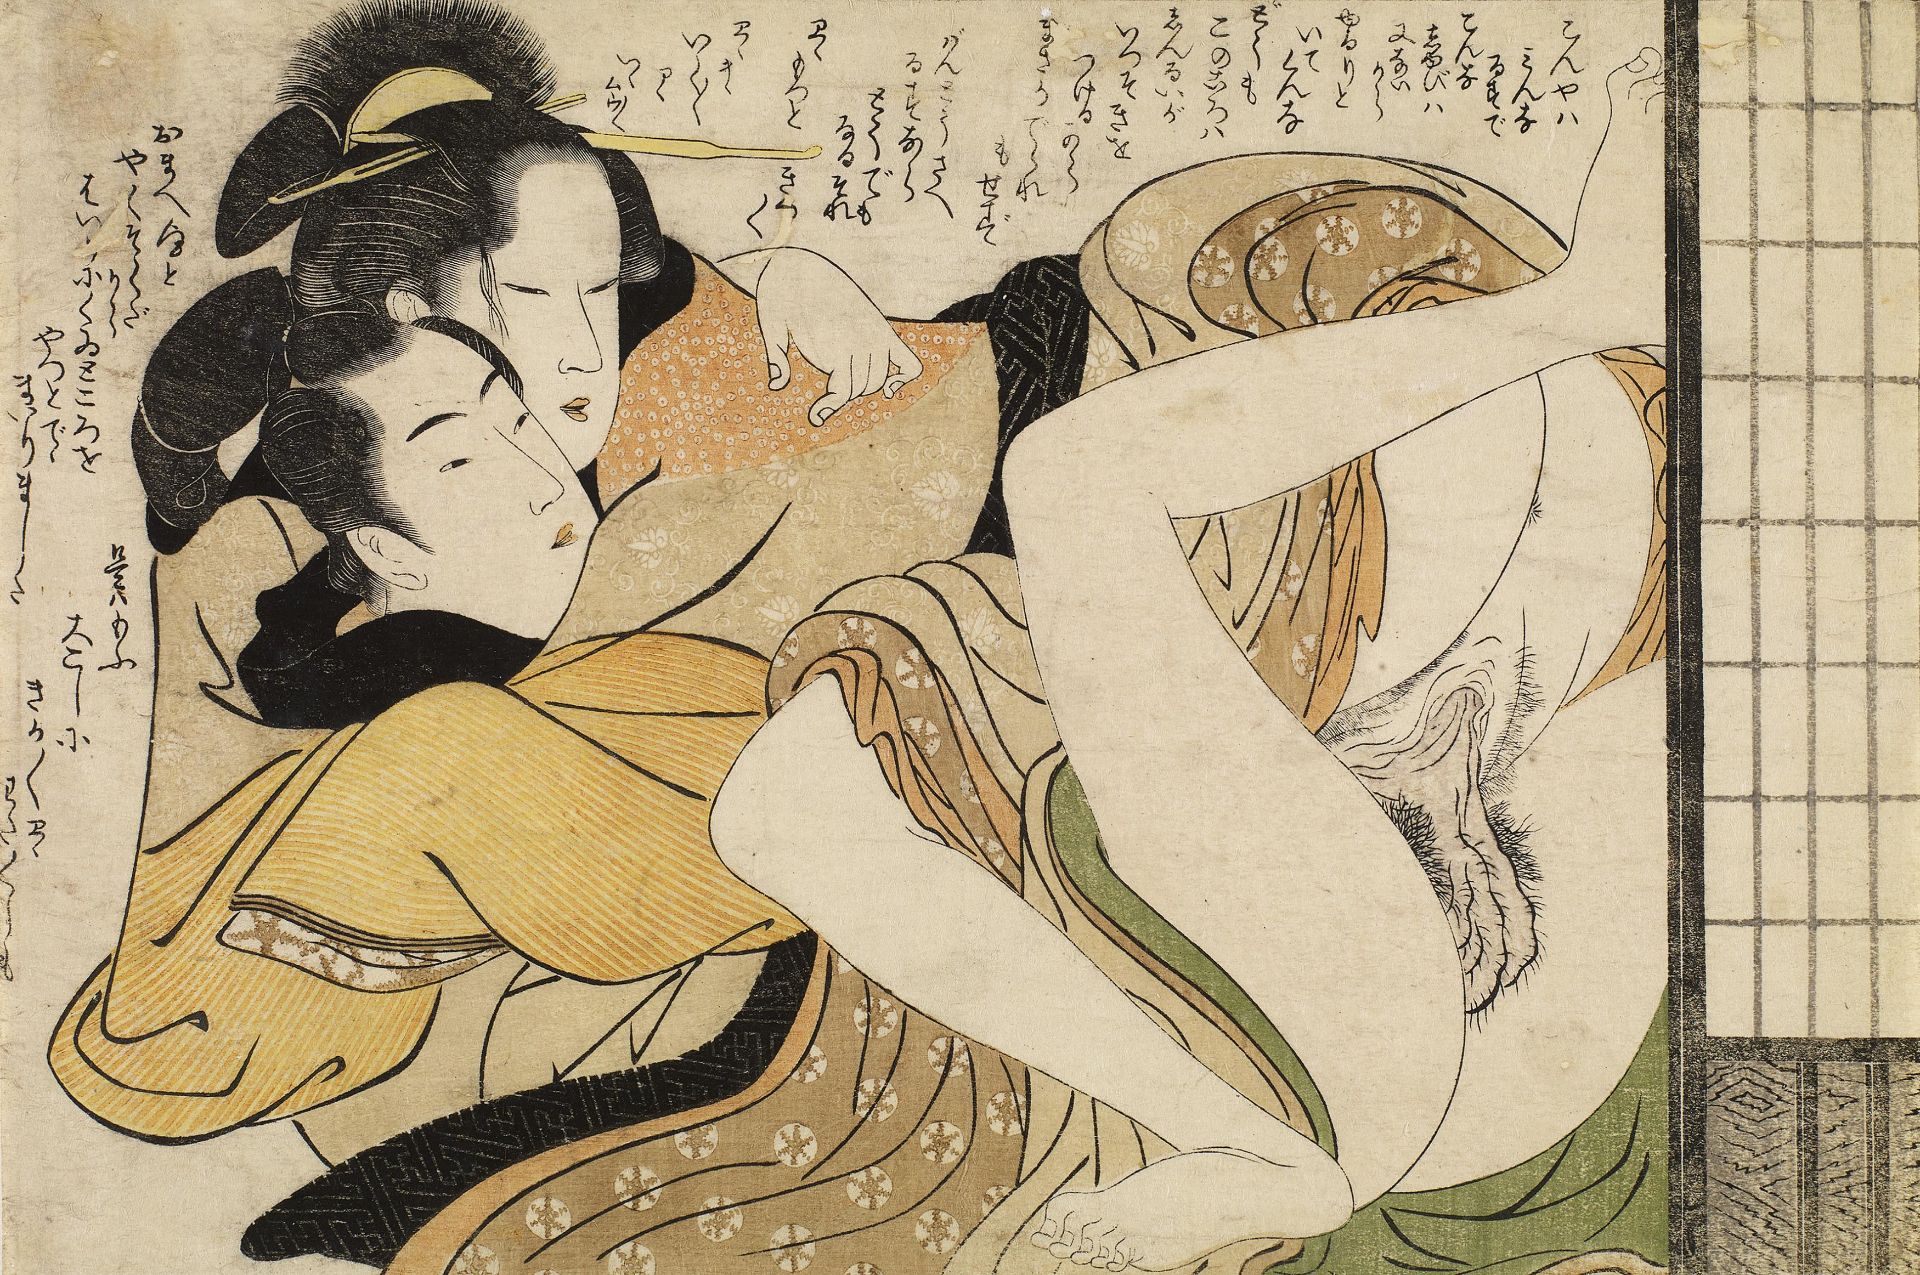 13 Blätter der Shunga-Serie "Fumi no kiyogaki" - Image 19 of 27